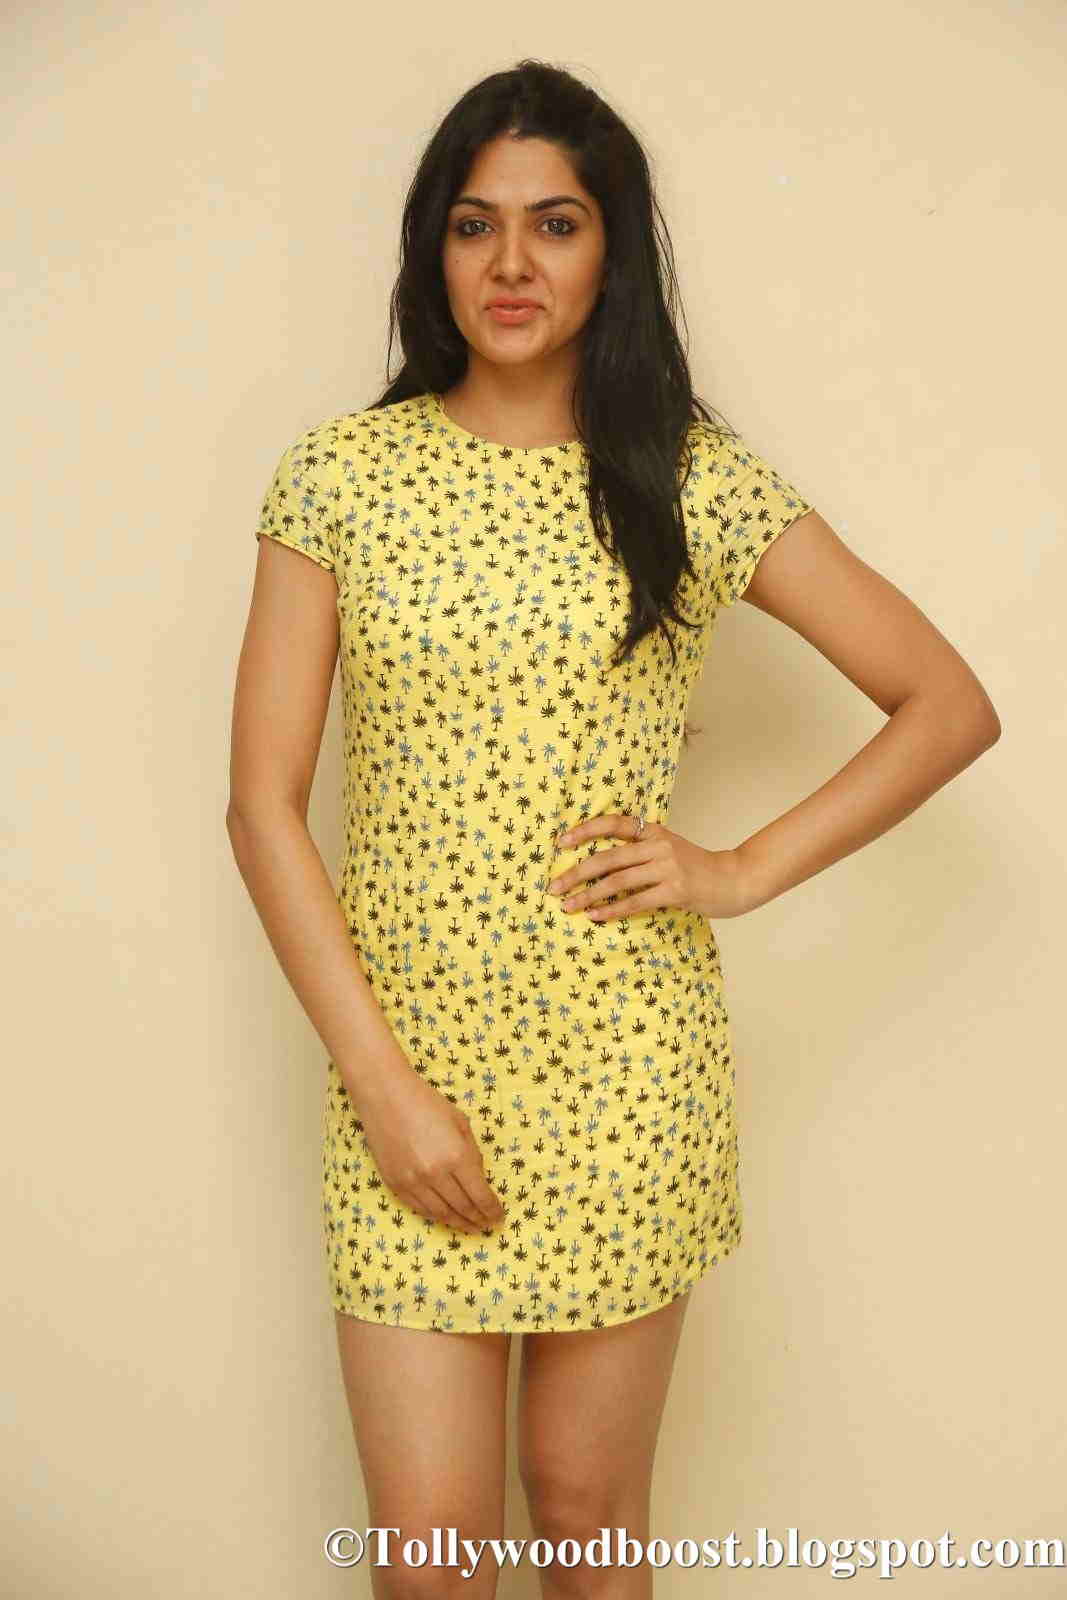 Actress Sakshi Chaudhary Long Legs Show In Yellow Mini Top